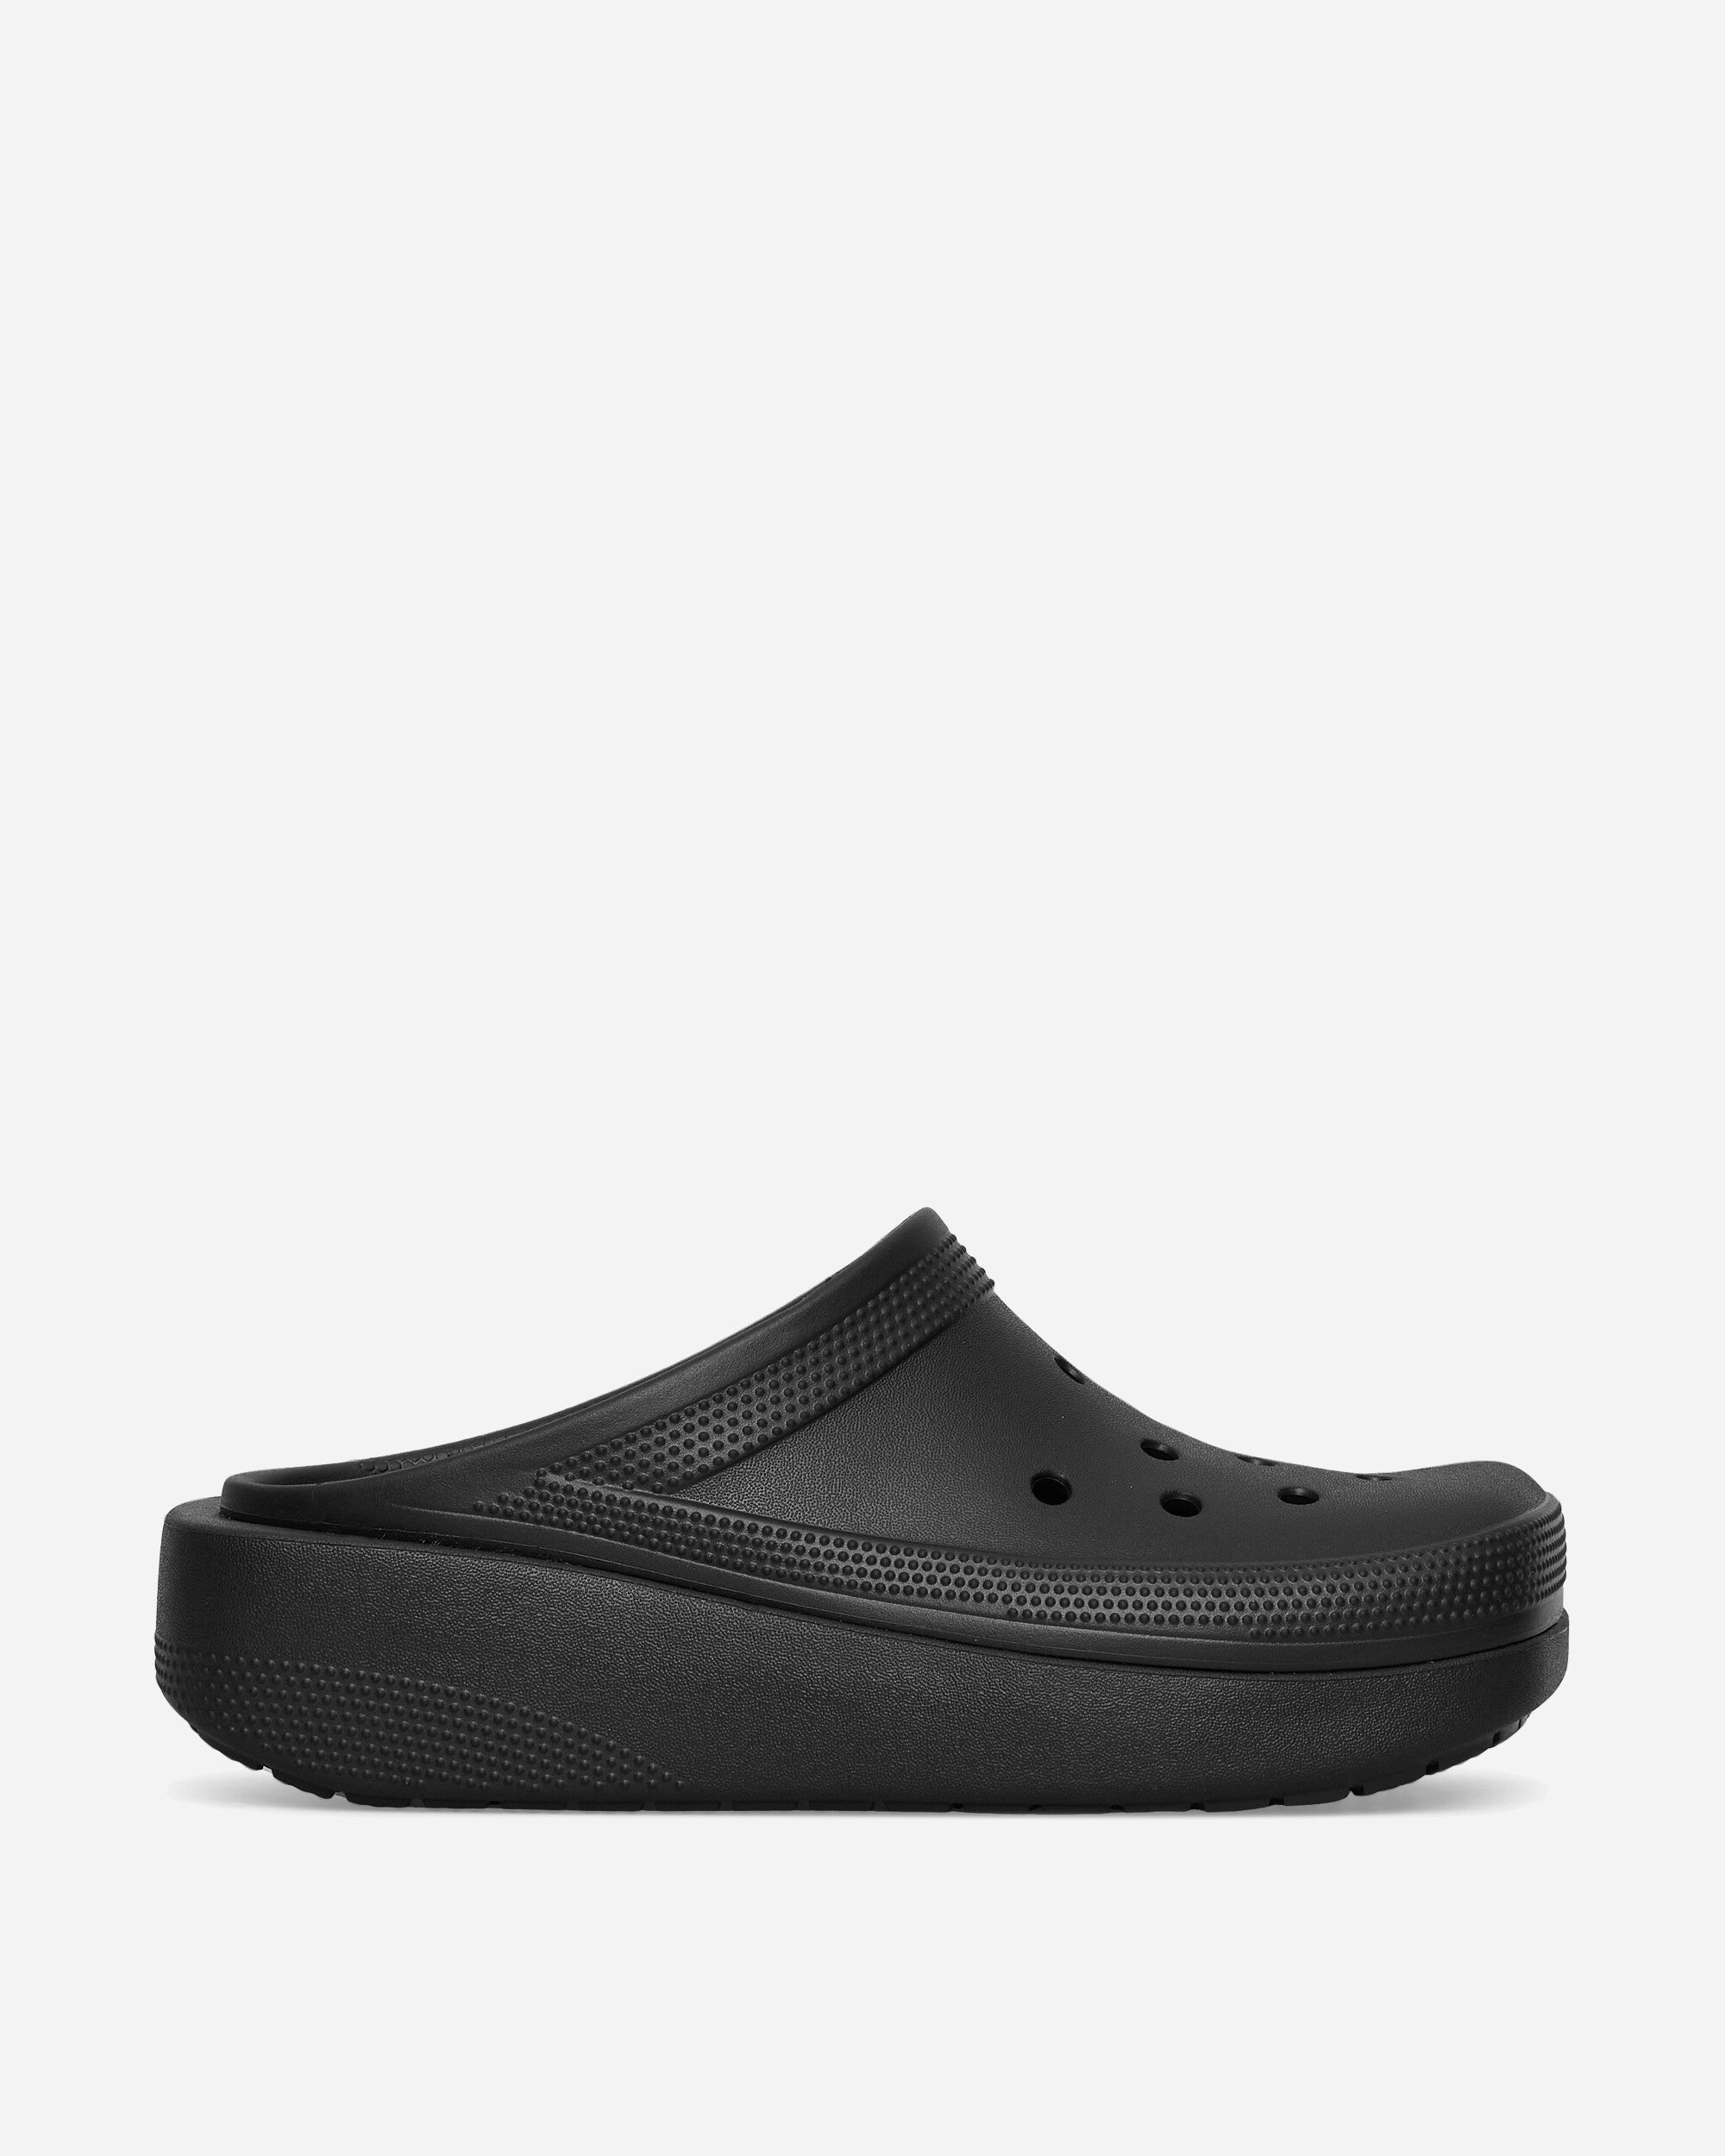 Crocs Classic Blunt Toe Black Sandals and Slides Sandals and Mules 209562W BLK